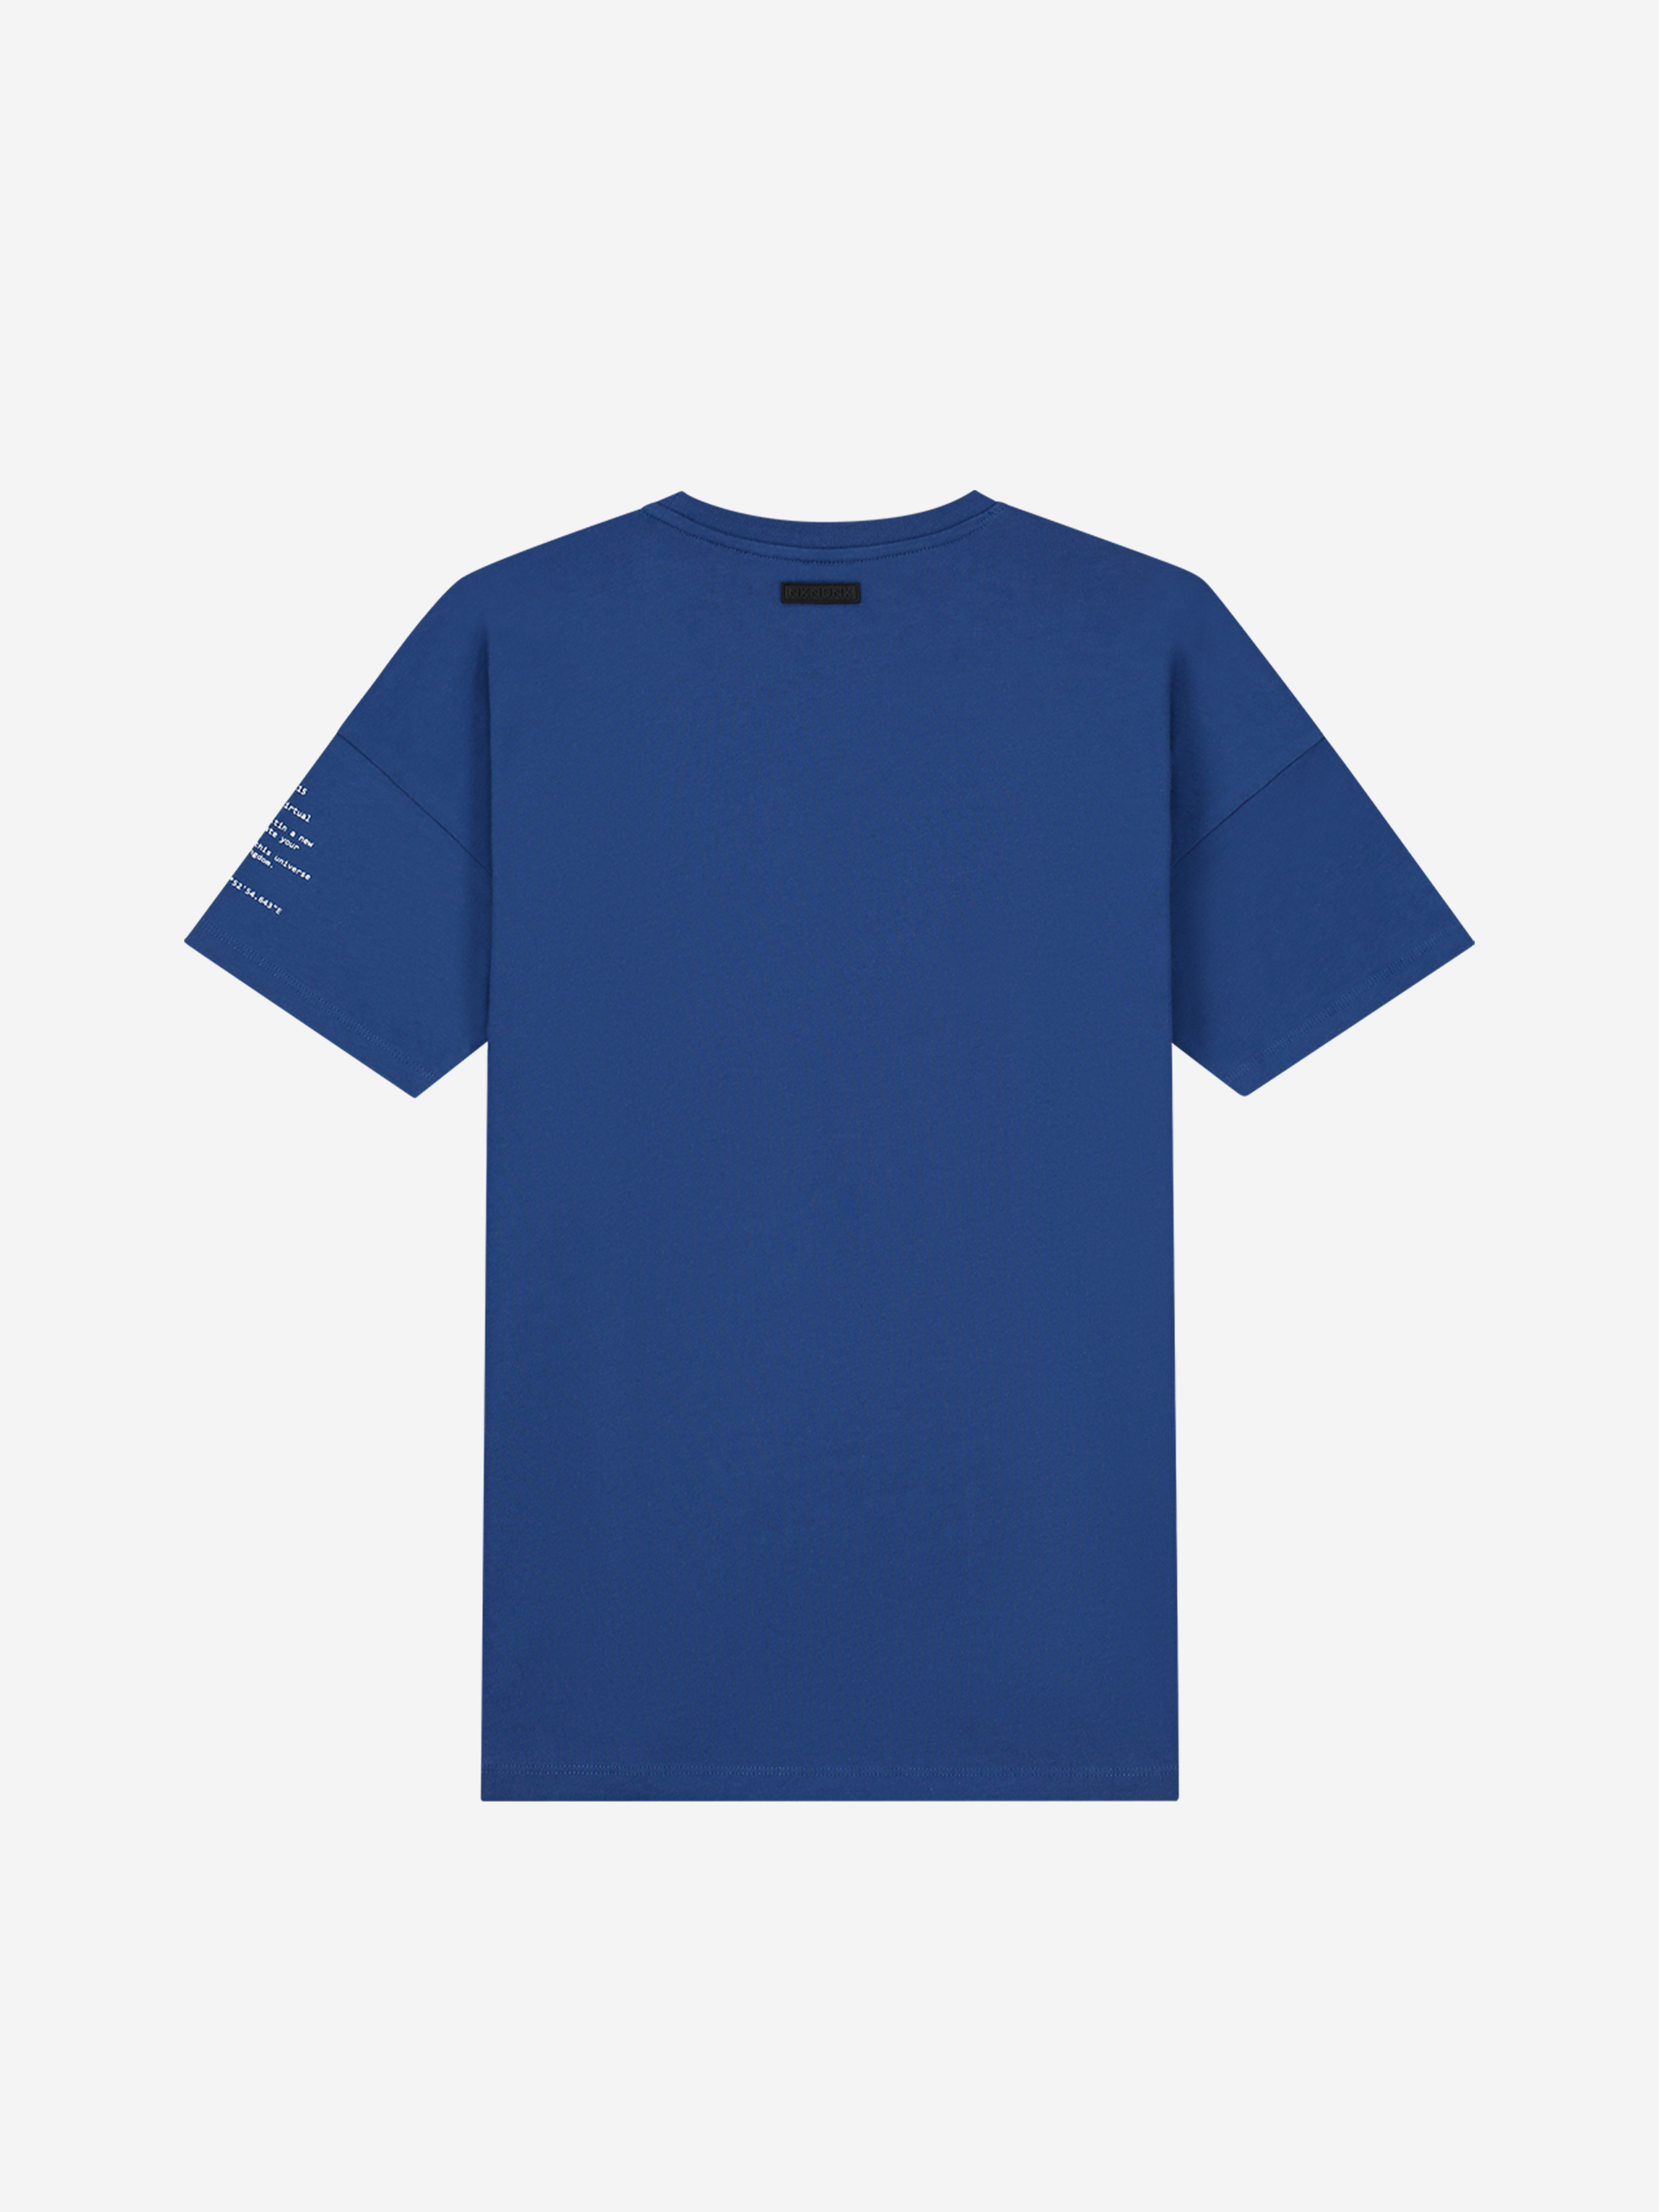 Digital T-Shirt